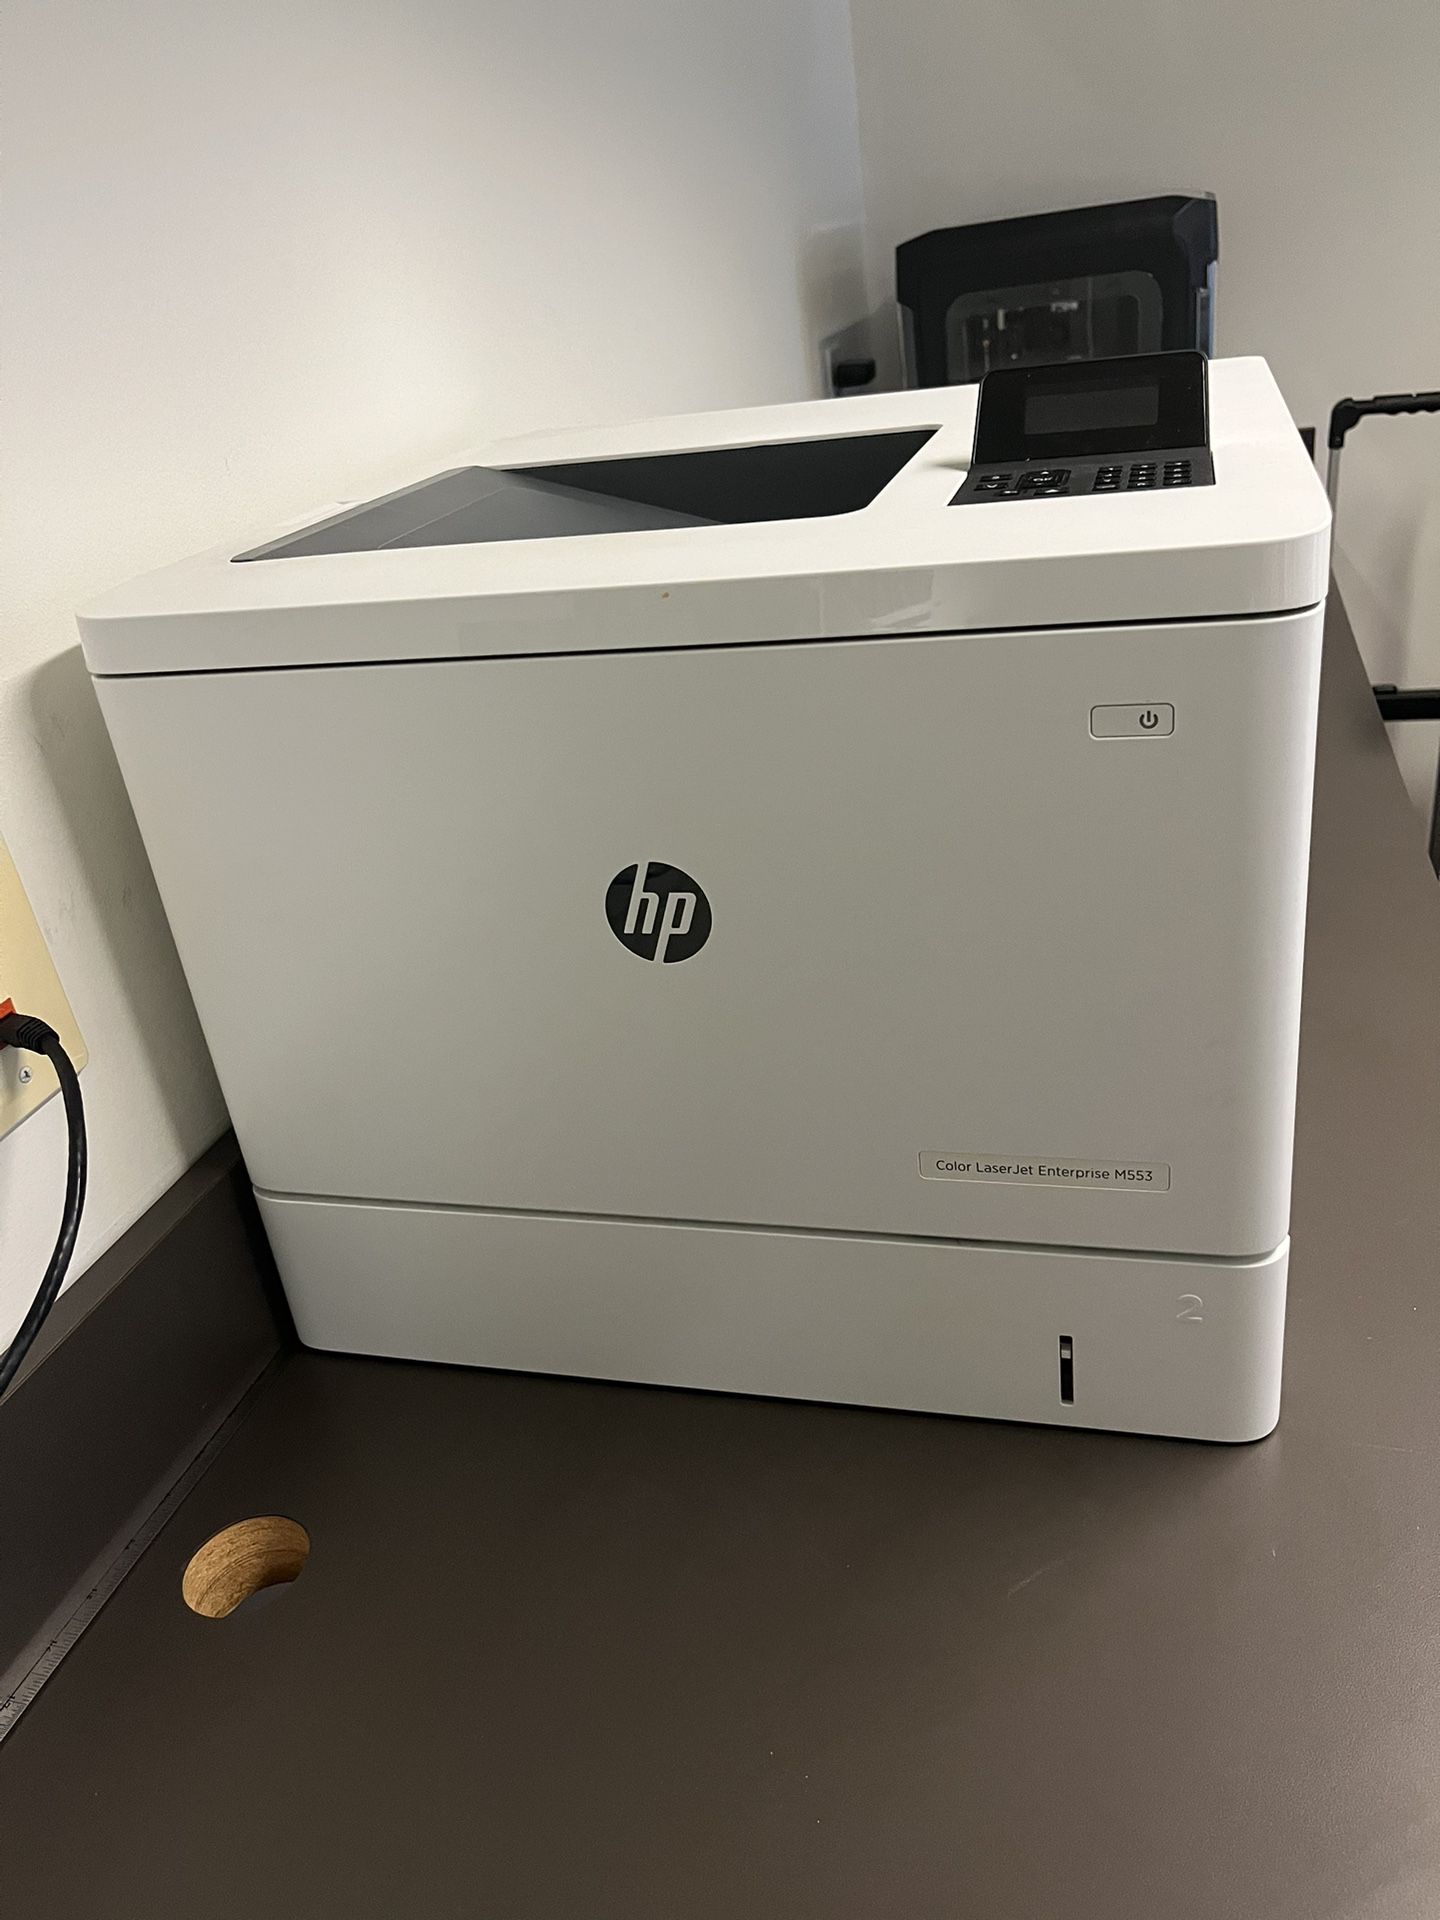 HP Color Laserjet Enterprise M553 Printer